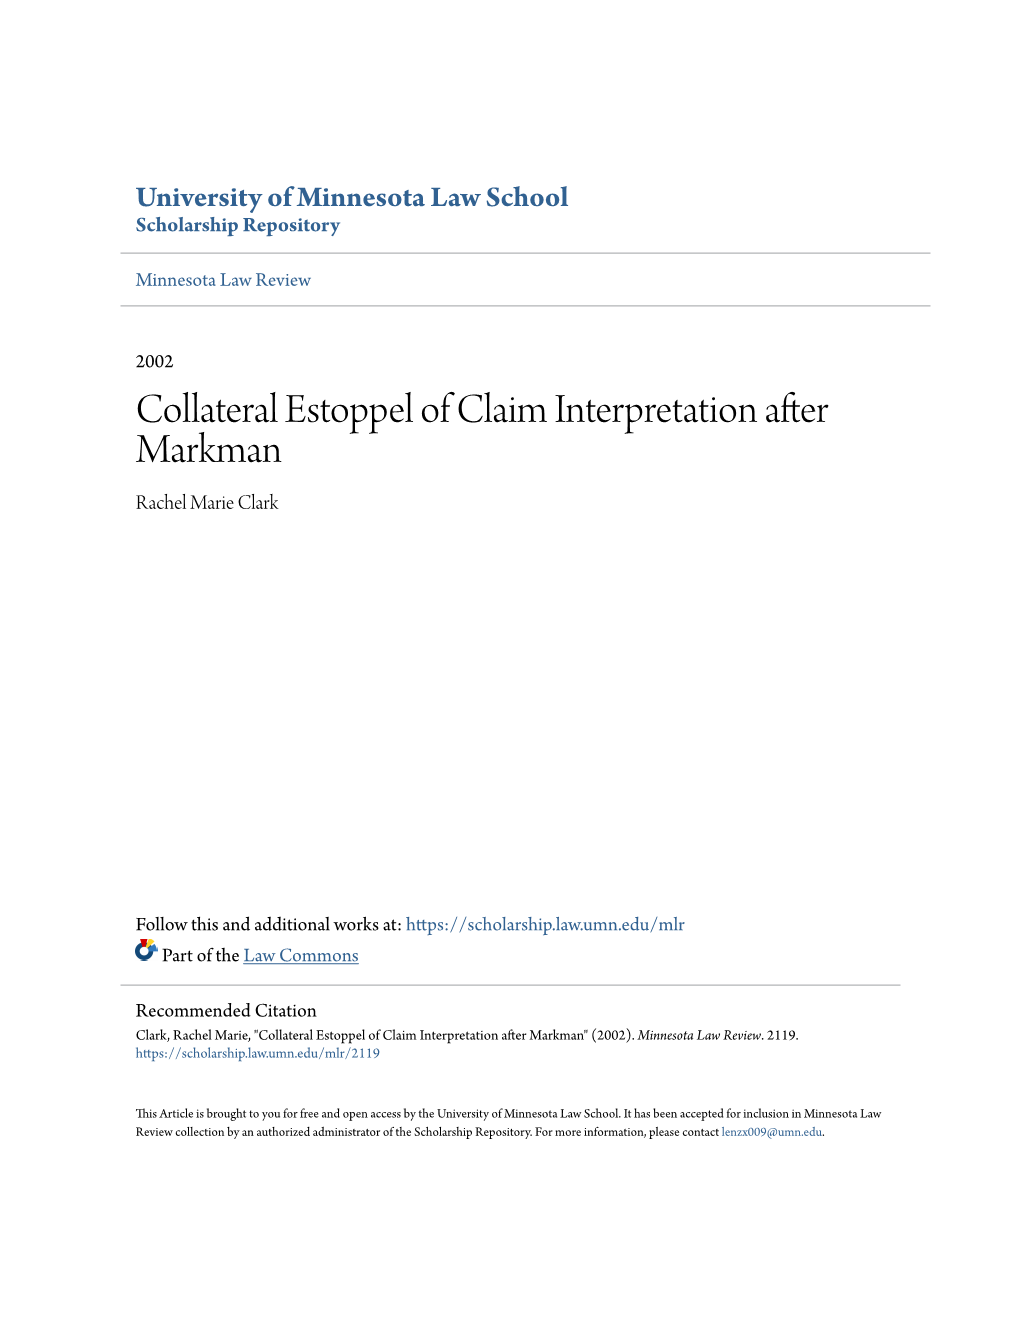 Collateral Estoppel of Claim Interpretation After Markman Rachel Marie Clark